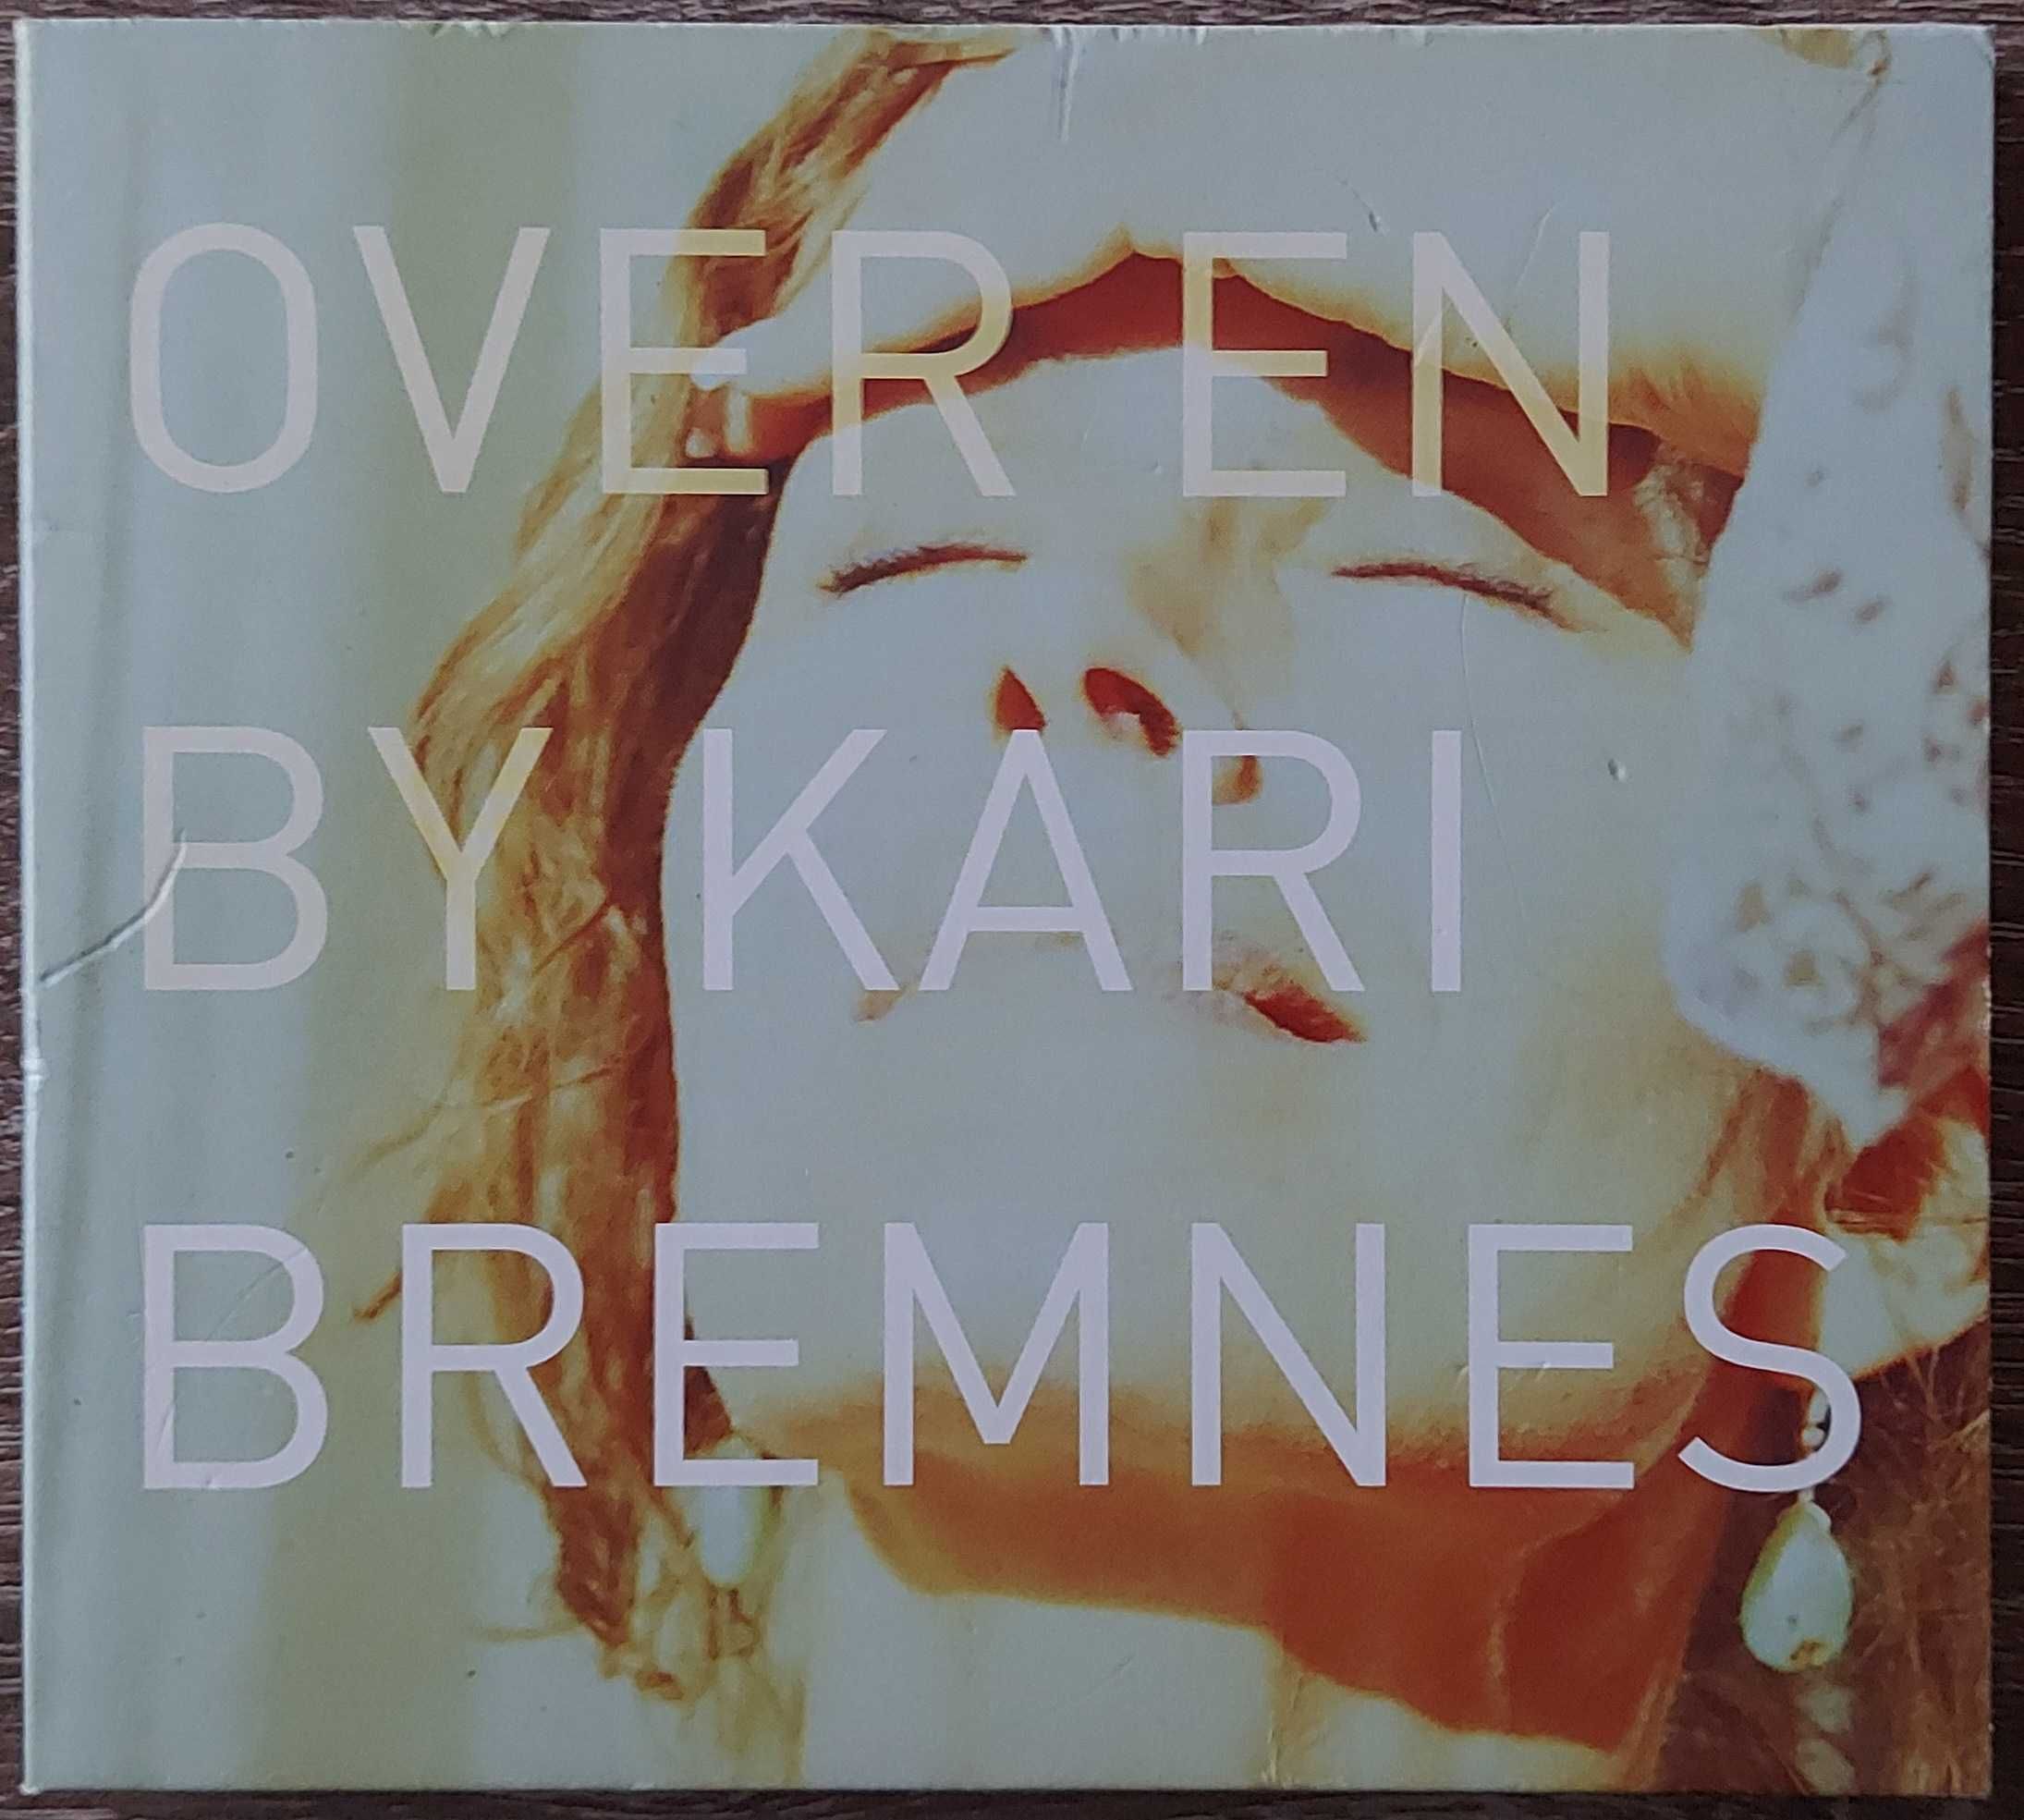 Kari Bremnes – Over En By